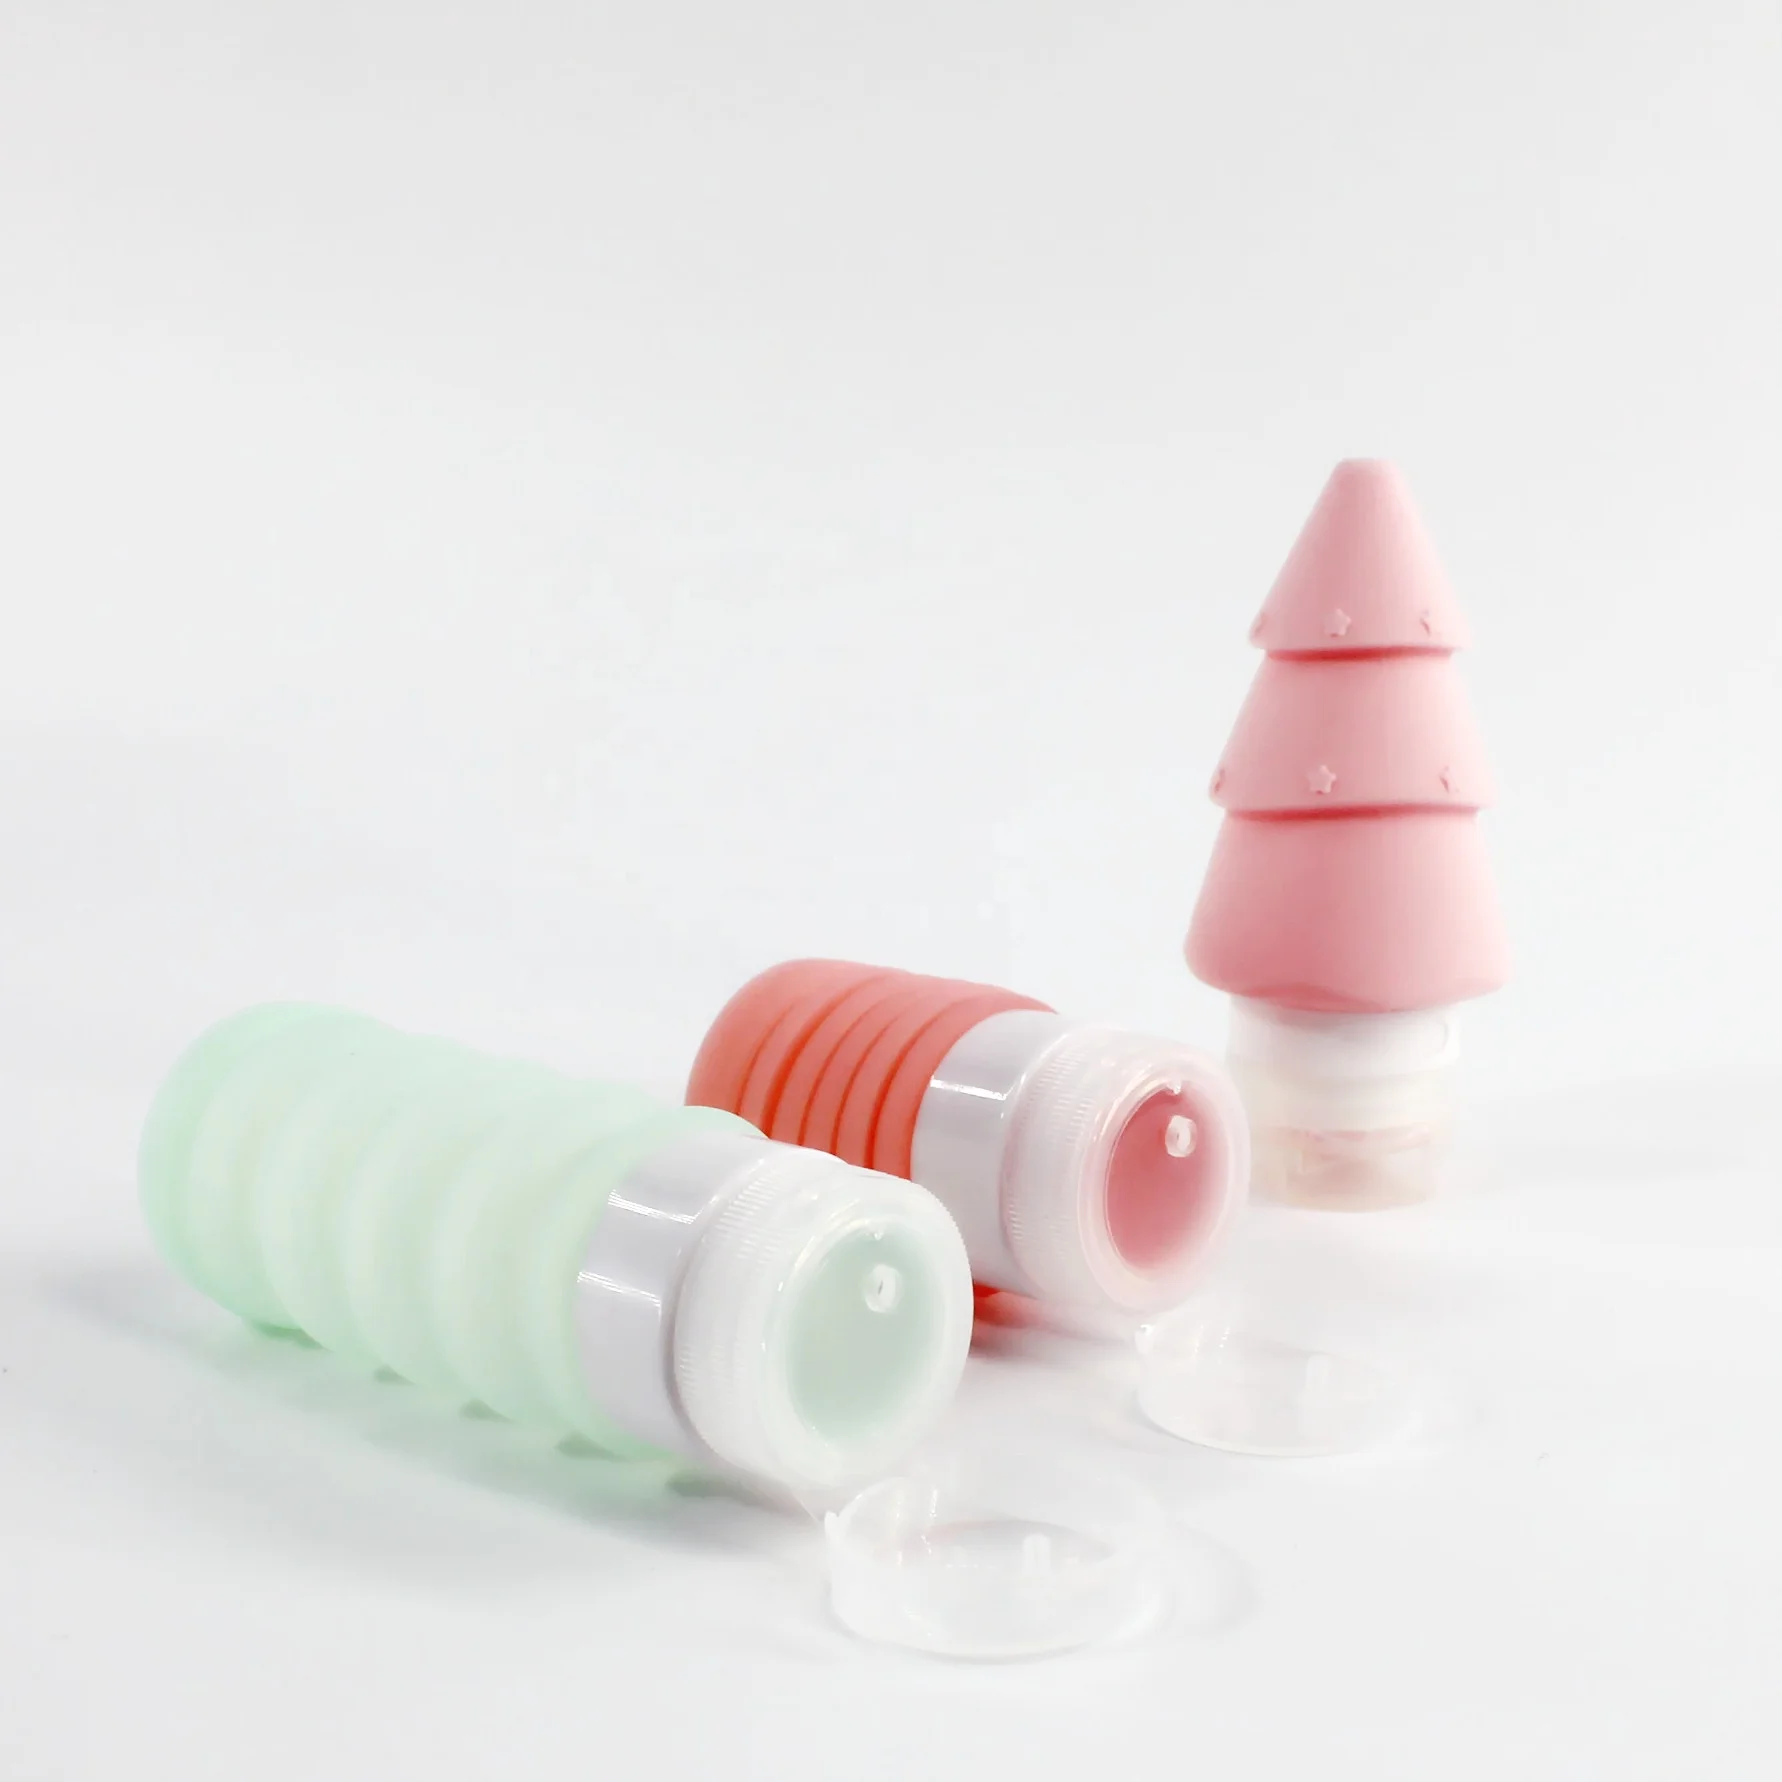 EASETRIP Hotselling Travel Foldable Silicone Bottle Travel Kit Gifts reusable skincare travel kits For Women facial kit